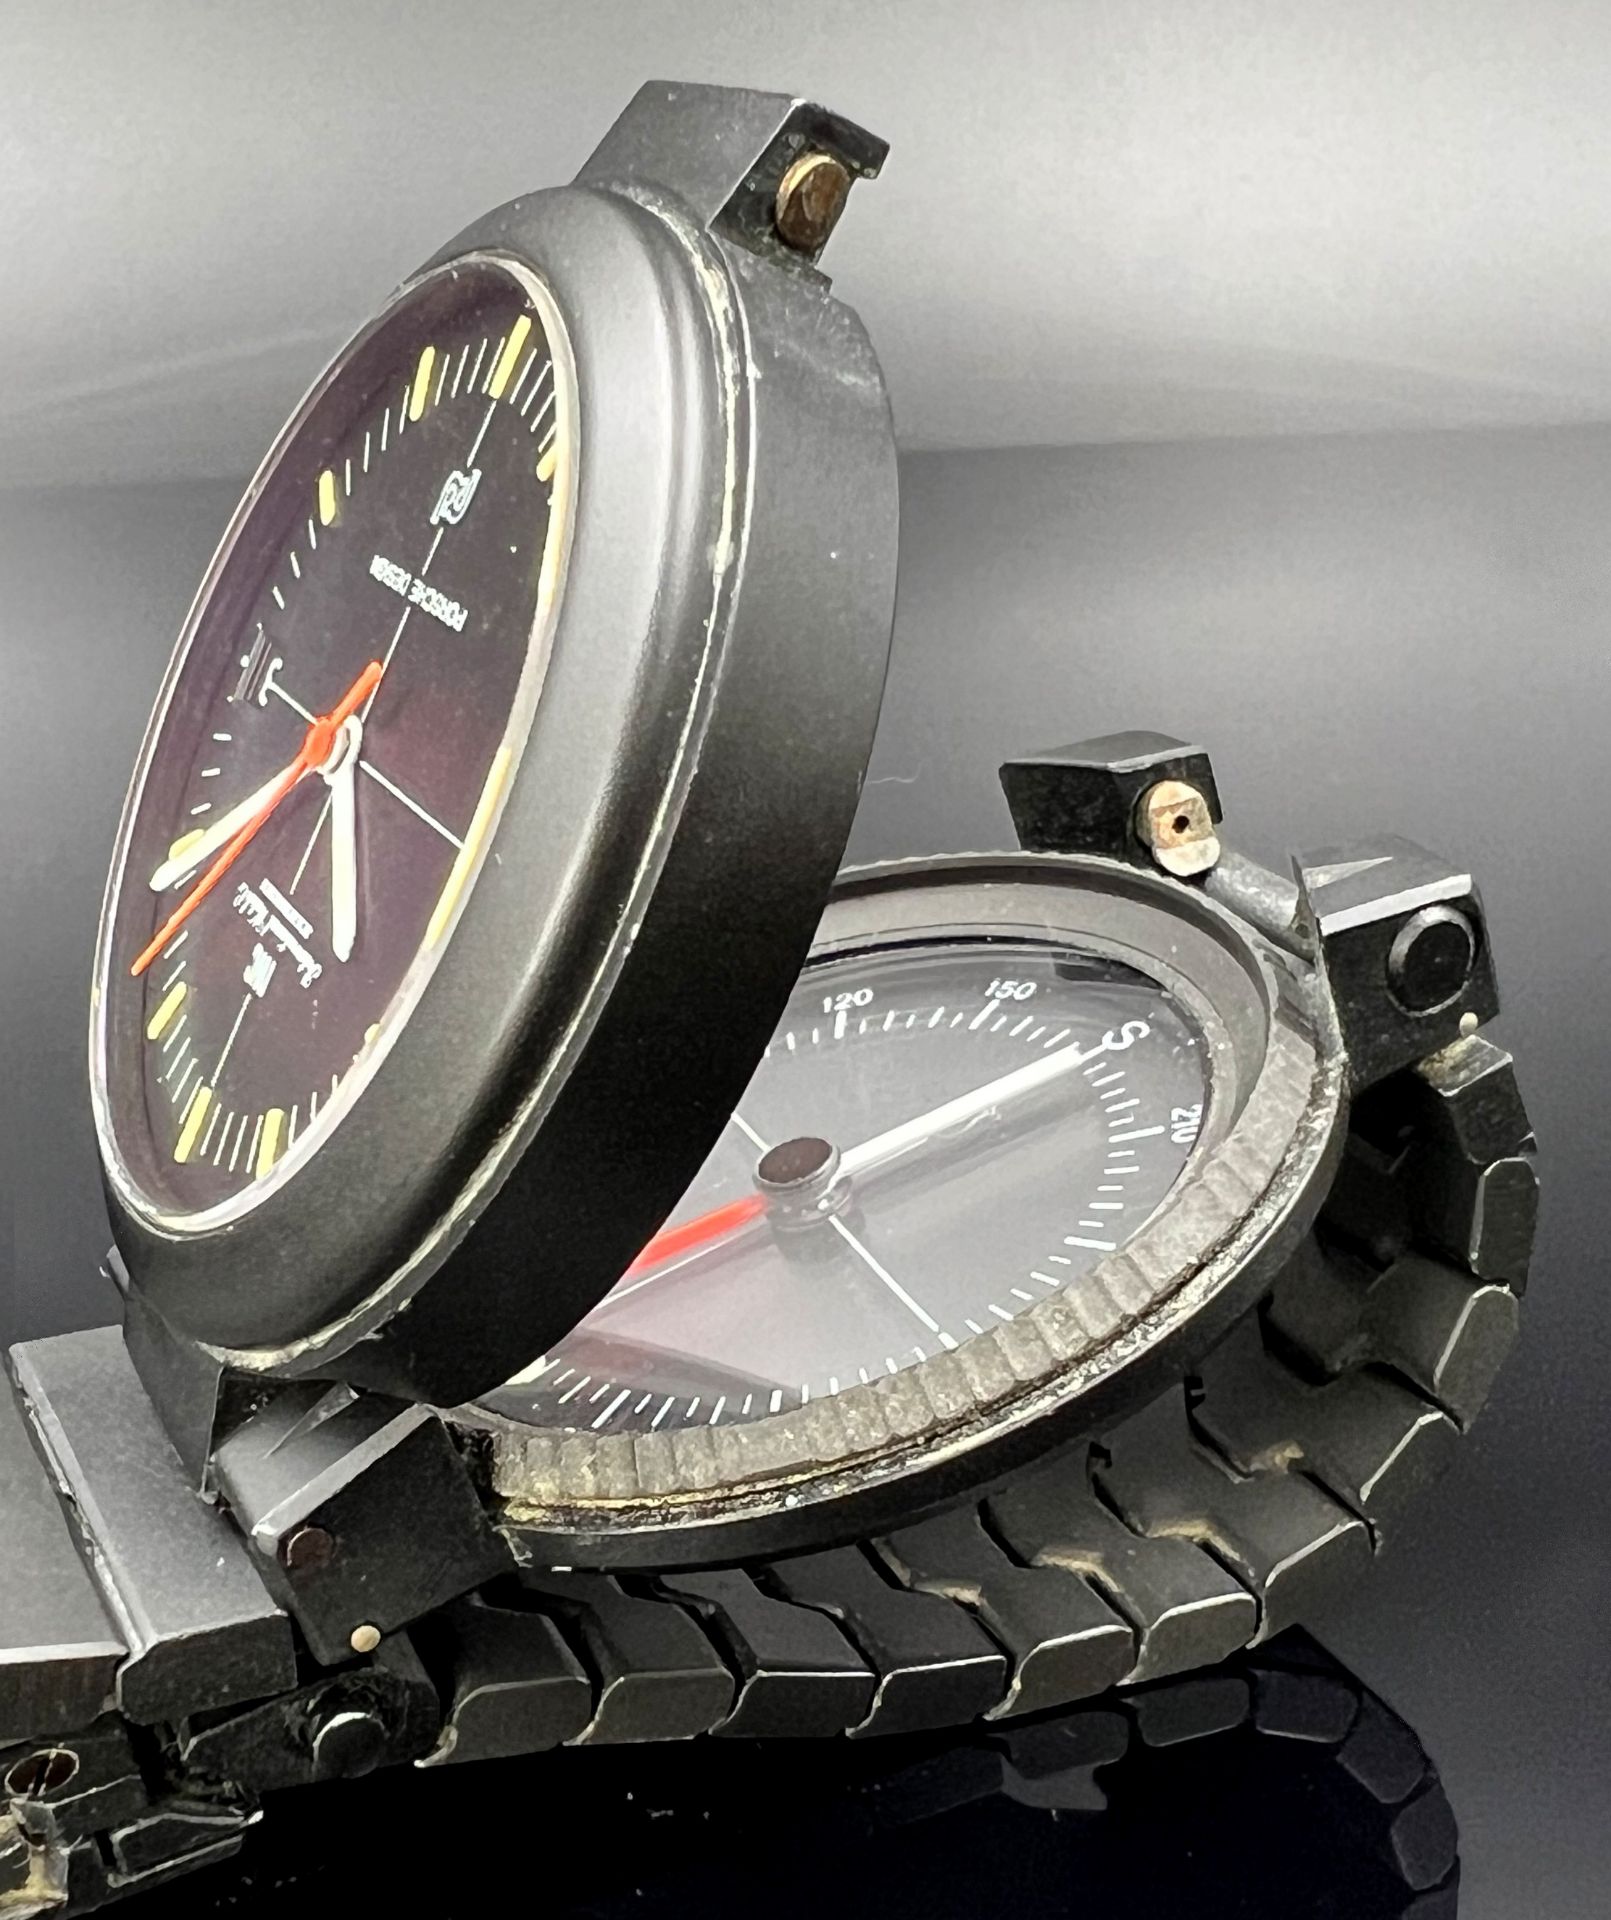 IWC Porsche Design men's wristwatch with compass. Automatic. Ref. 3510. - Image 7 of 10